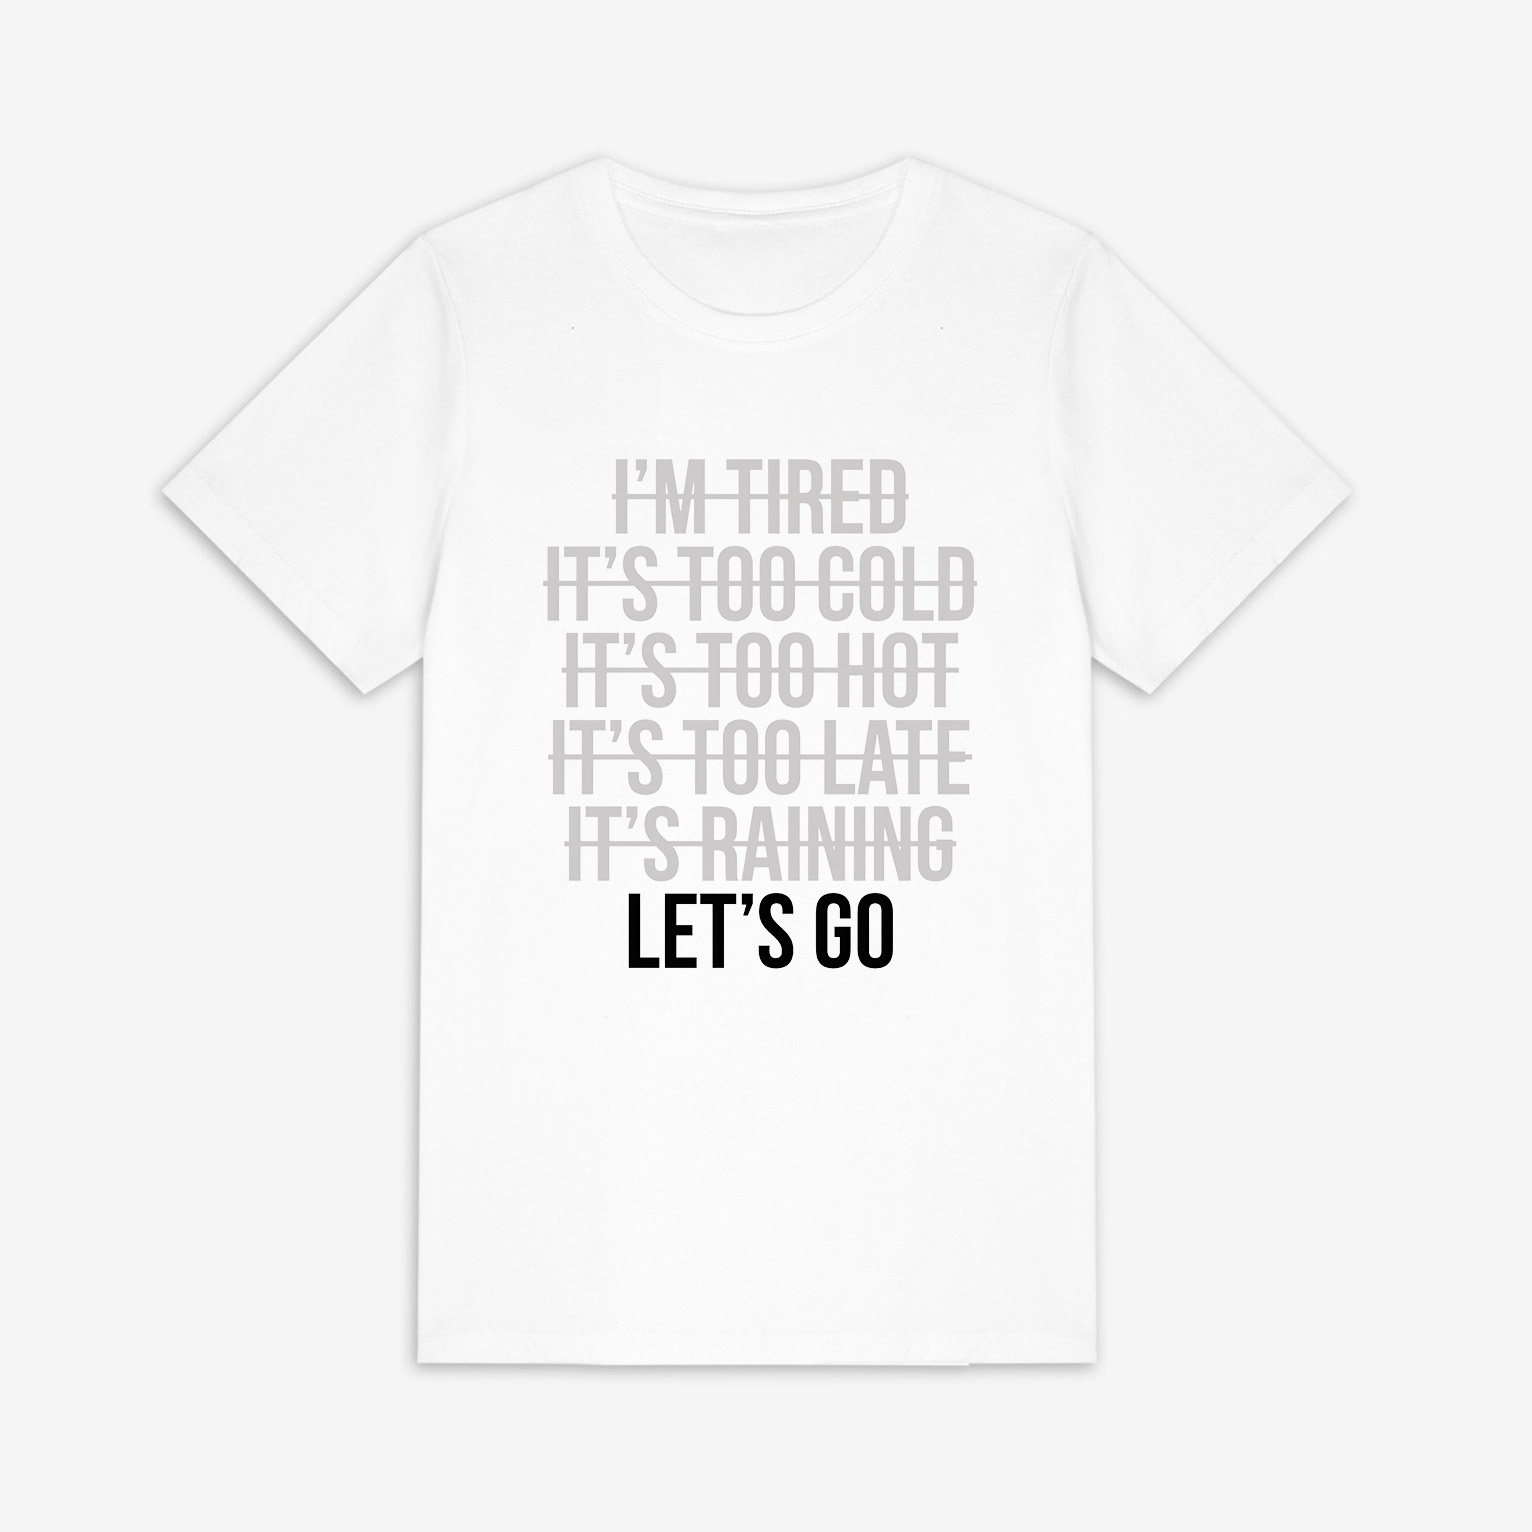 Let's Go Printed Women's T-shirt